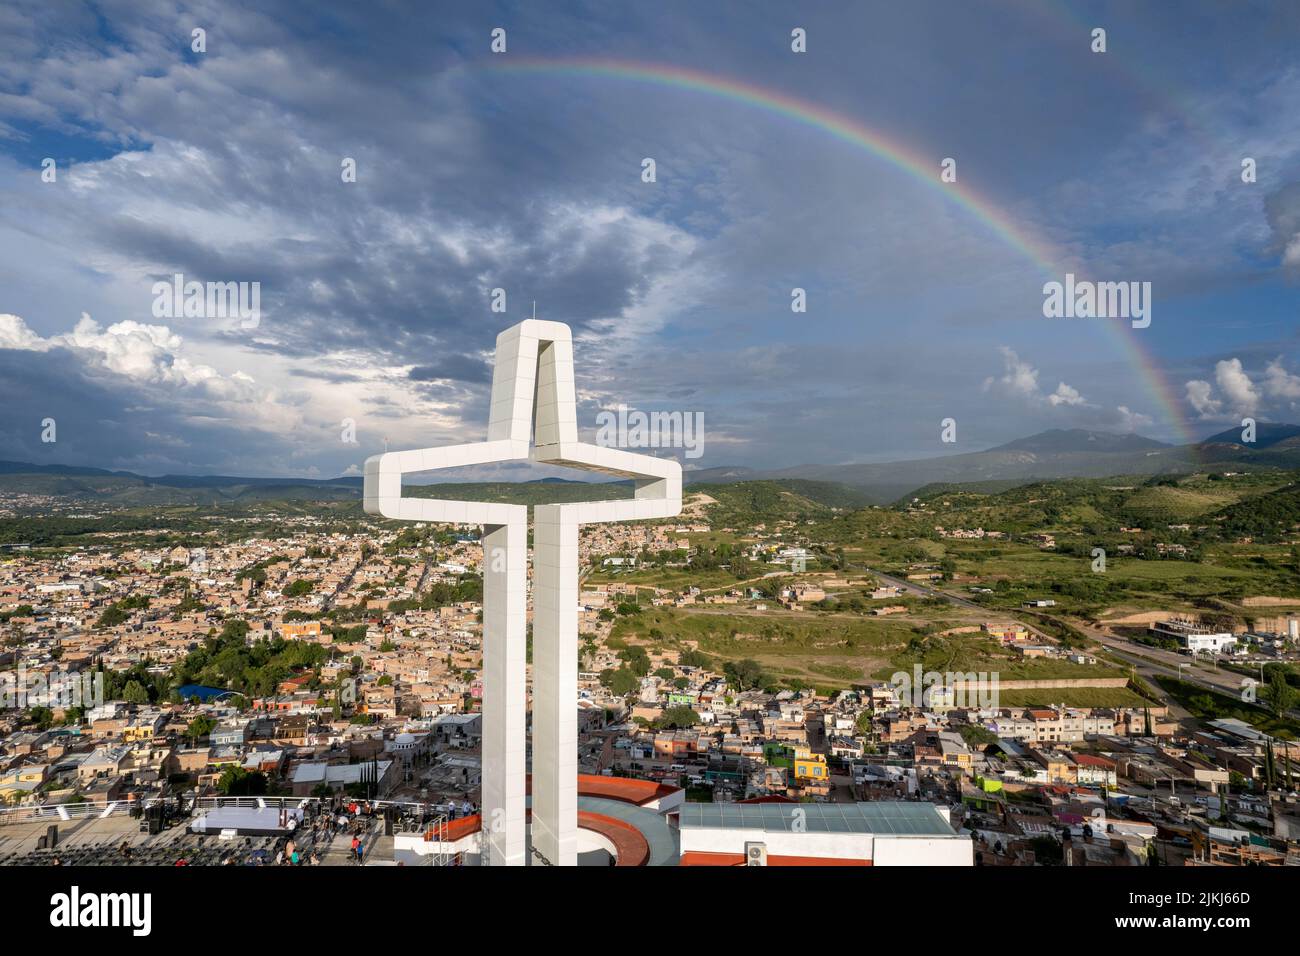 A rainbow over the Santa Cruz and the cityscape of the Calvillo  in Aguascalientes, Mexico Stock Photo